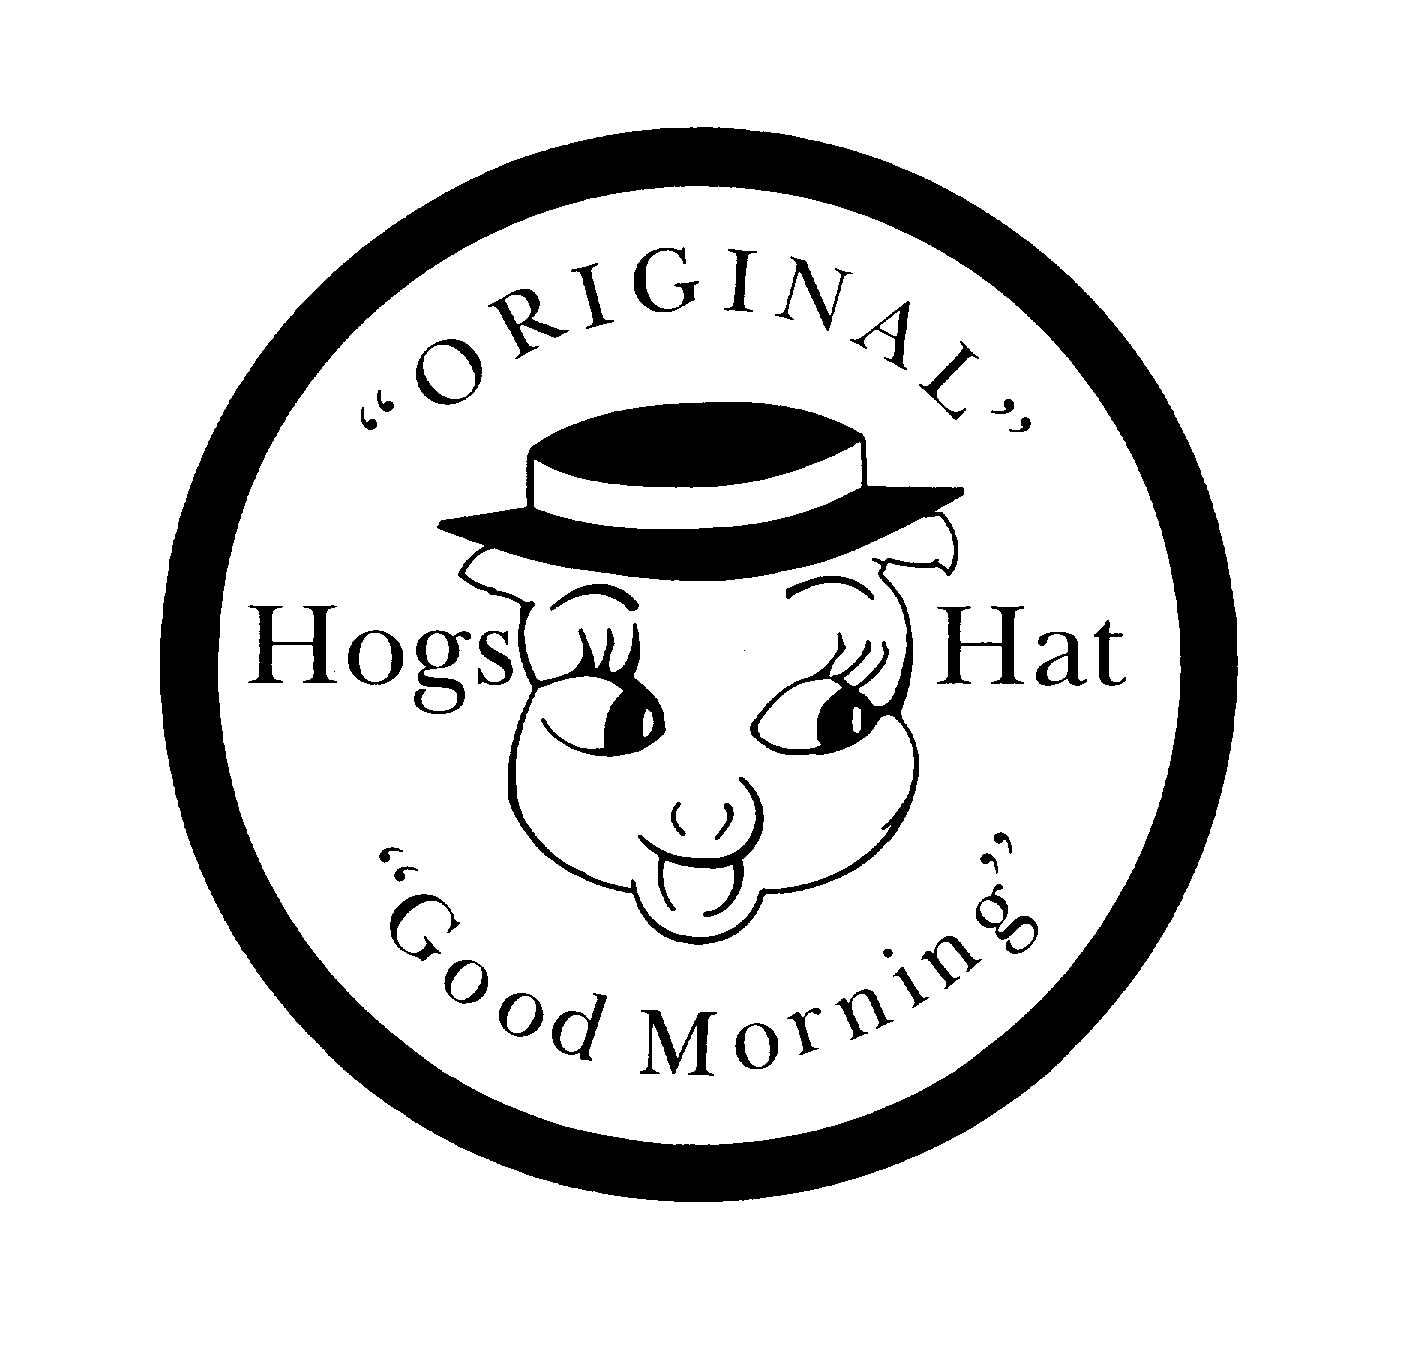  HOGS HAT "ORIGINAL" "GOOD MORNING"